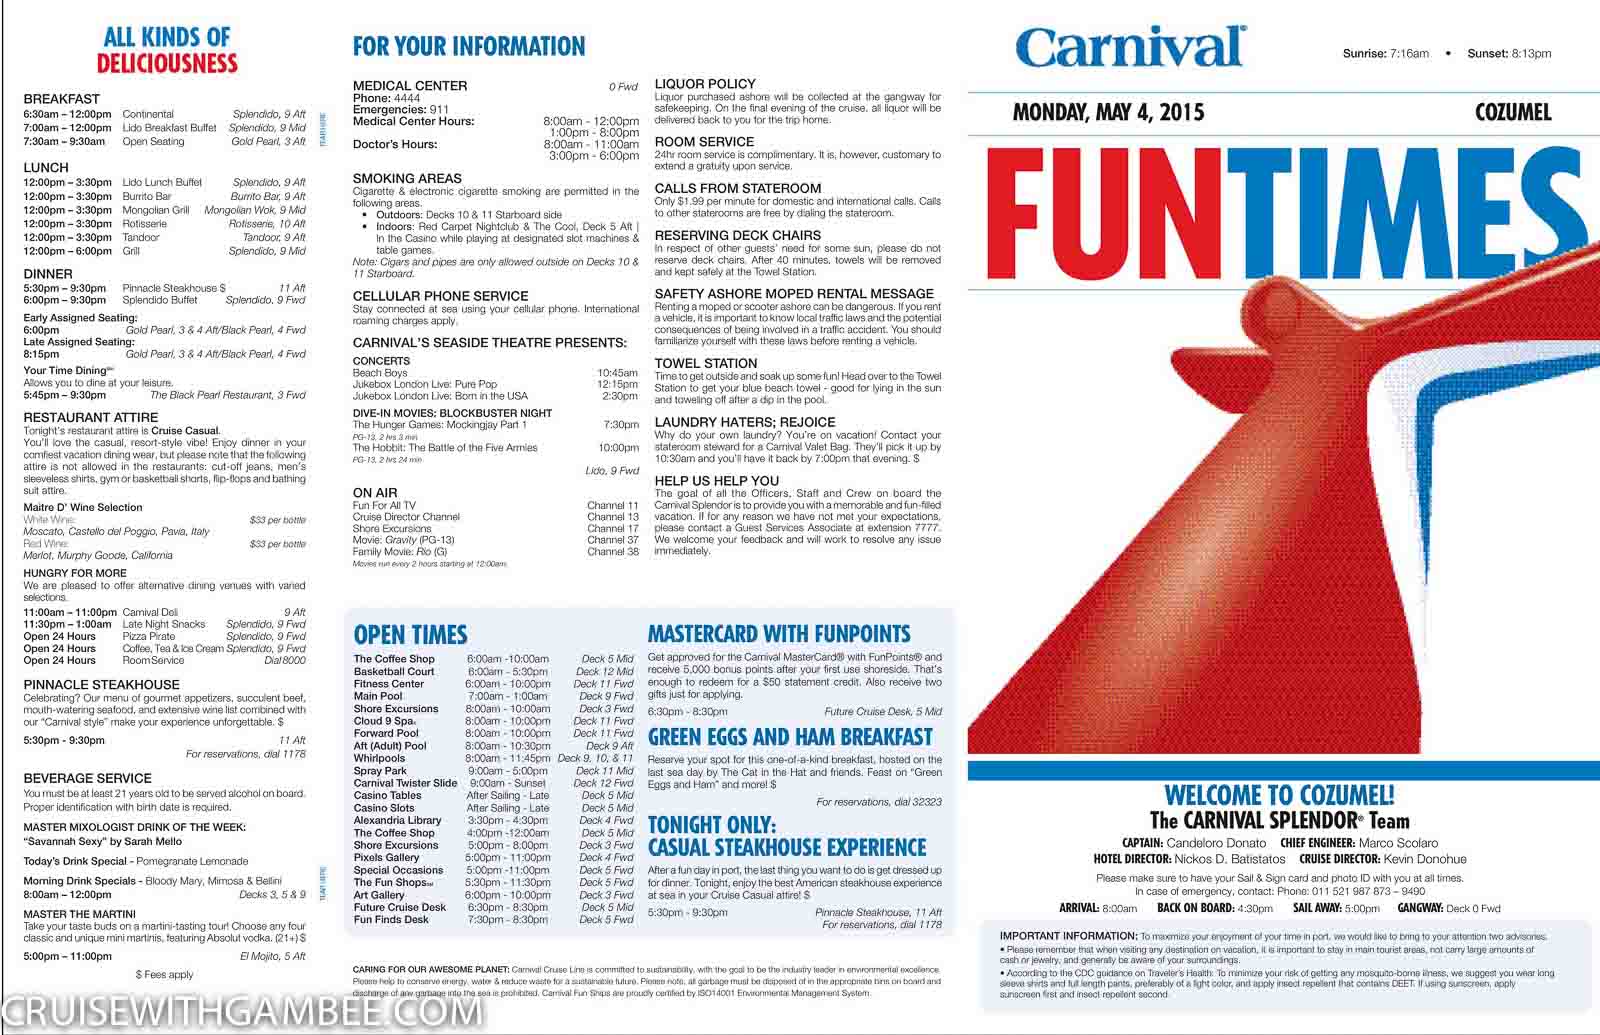 Carnival Splendor Funtimes-4